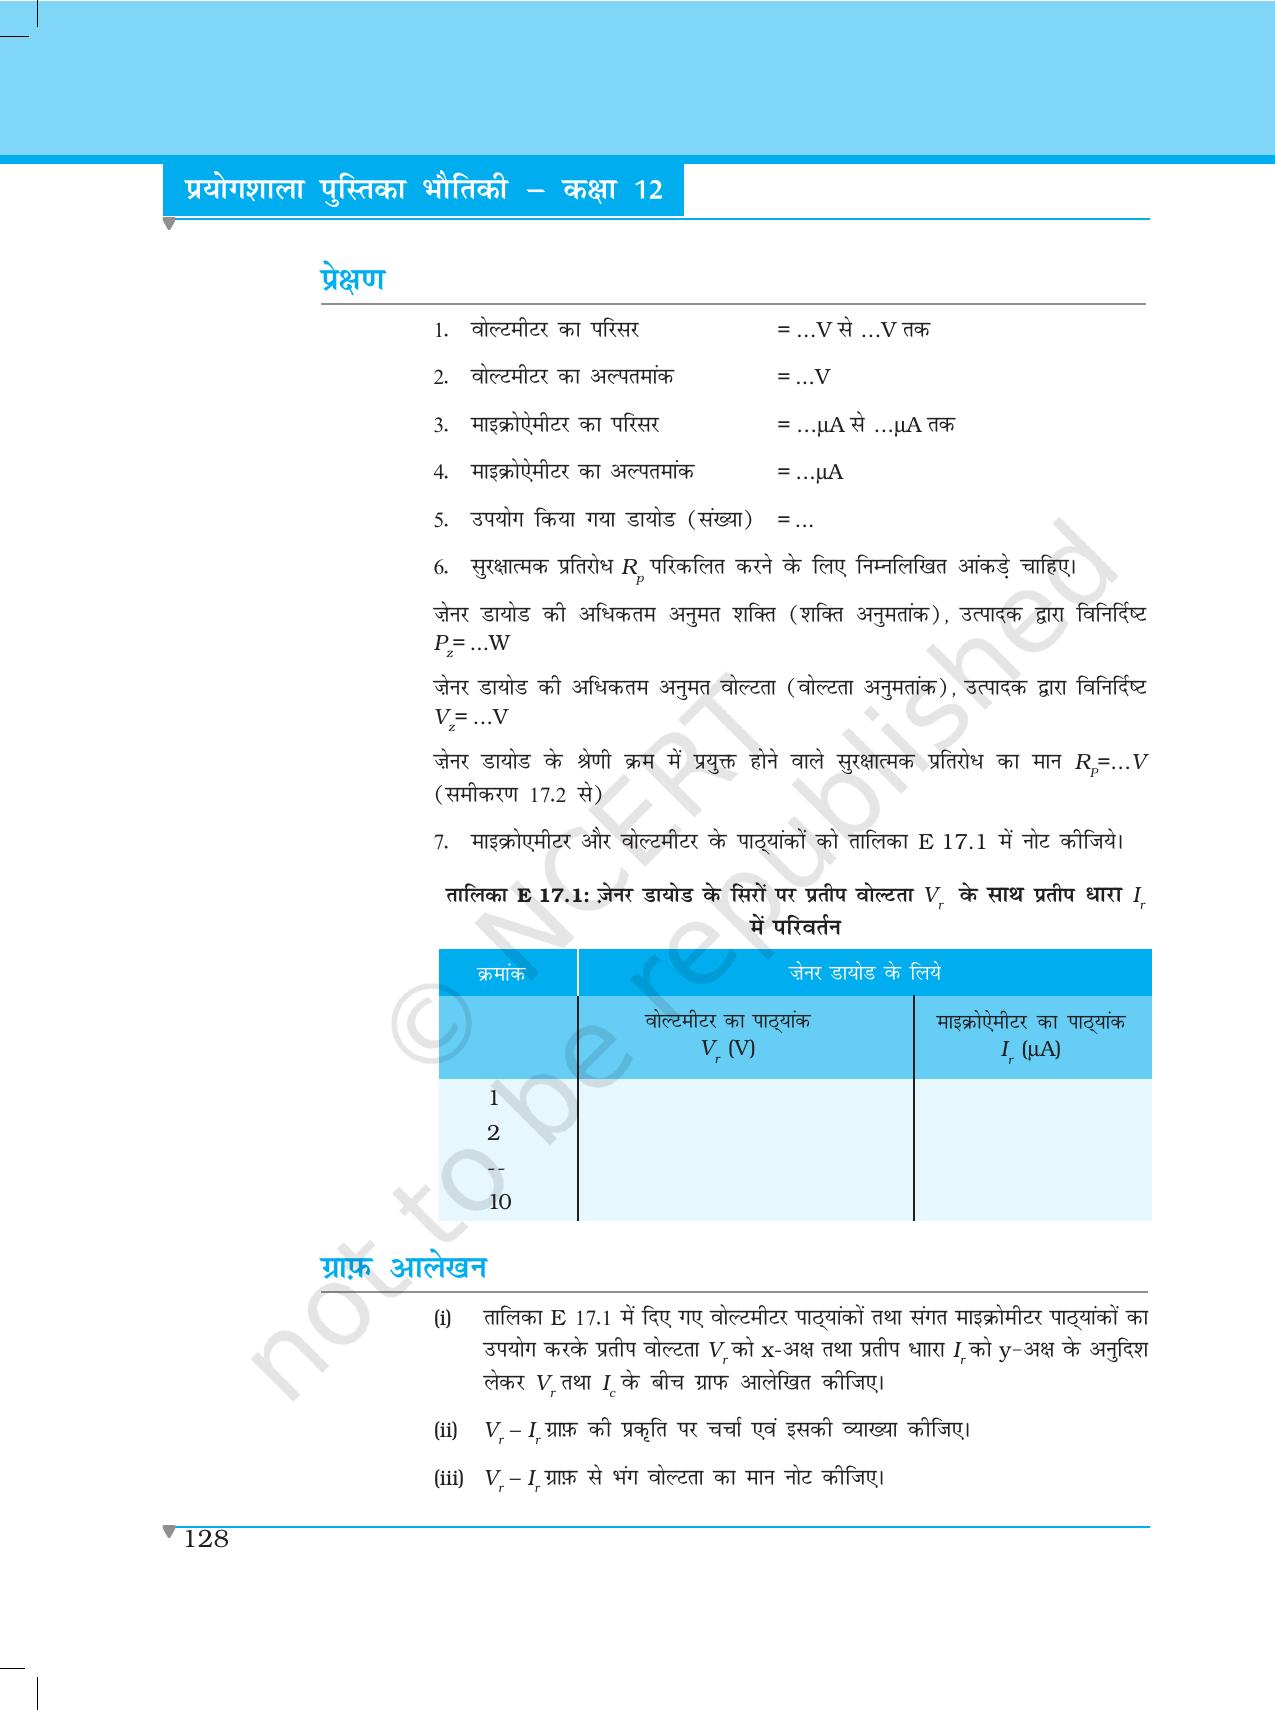 NCERT Laboratory Manuals for Class XII भौतिकी - प्रयोग (14 - 18) - Page 24